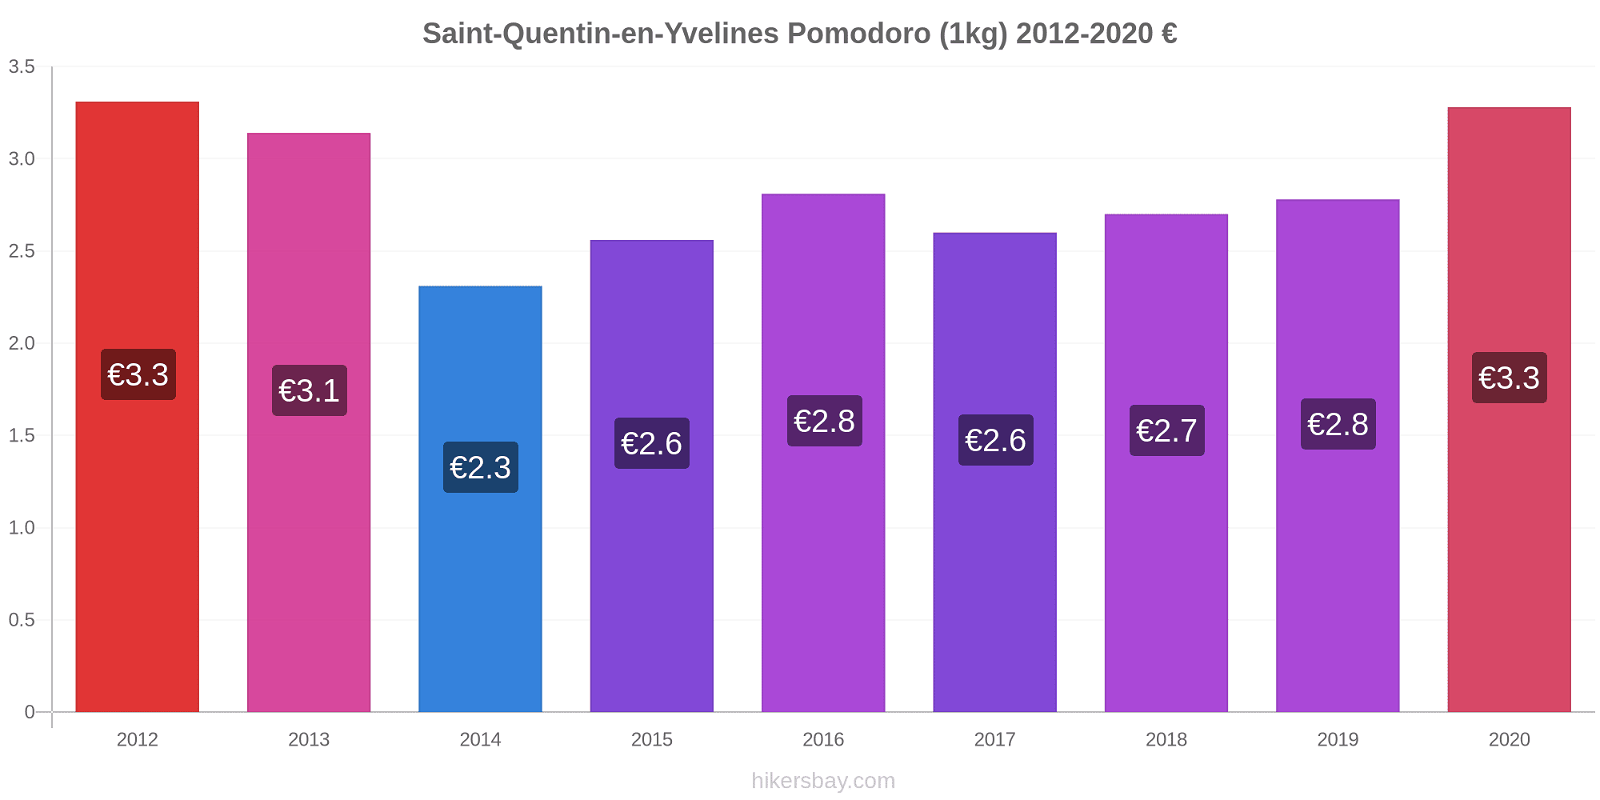 Saint-Quentin-en-Yvelines variazioni di prezzo Pomodoro (1kg) hikersbay.com